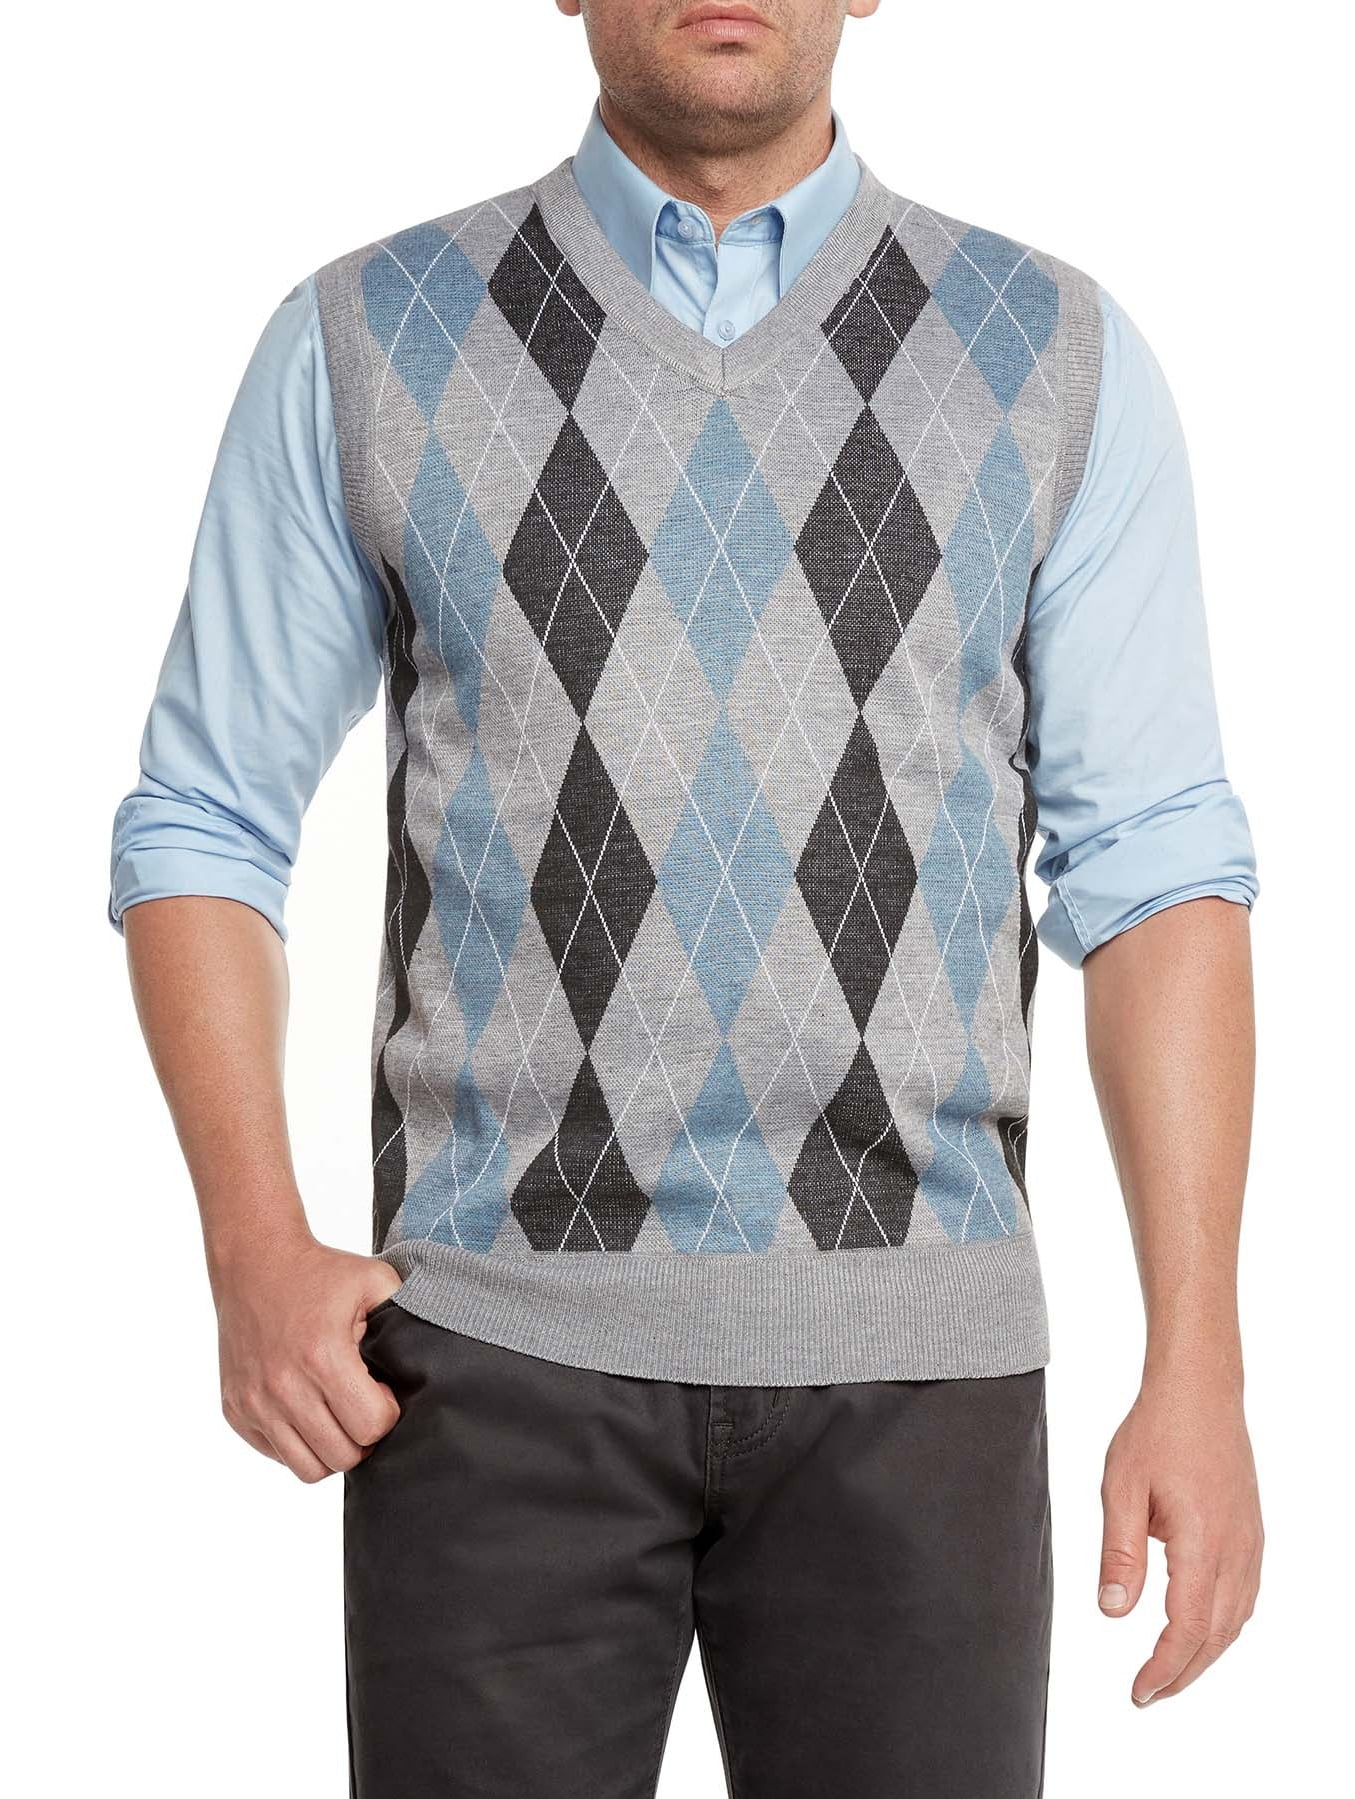 Mens Diamond Argyle River Road Jumper Knitted V Neck Sweater Pullover Soft Top 